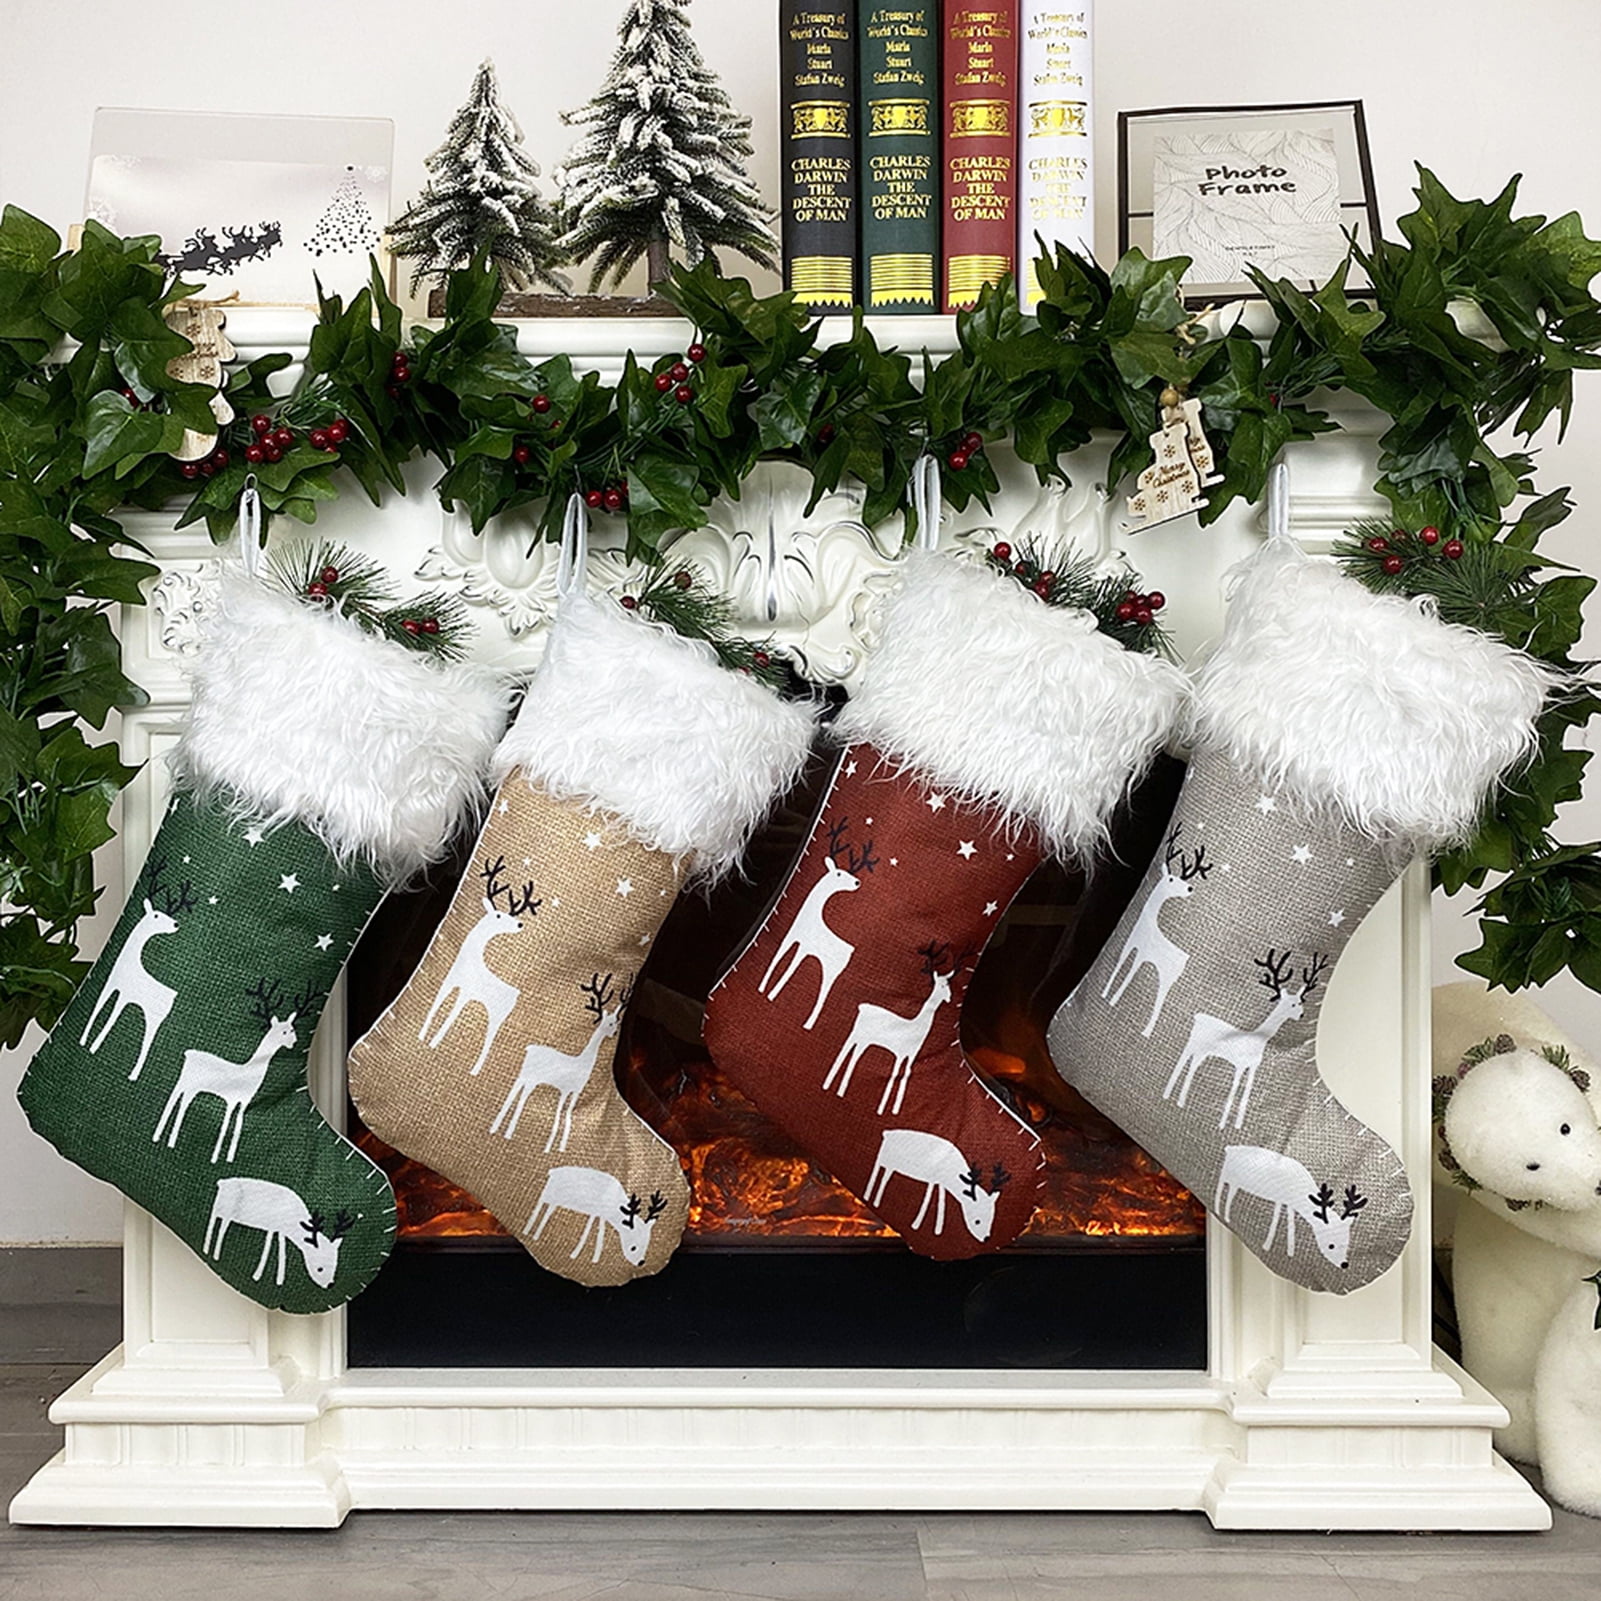 tribal kilim santa stockings wool kilim stockings 11x18 fire place decor christmas gift wool stockings santa socks entryway xmas decor 02830